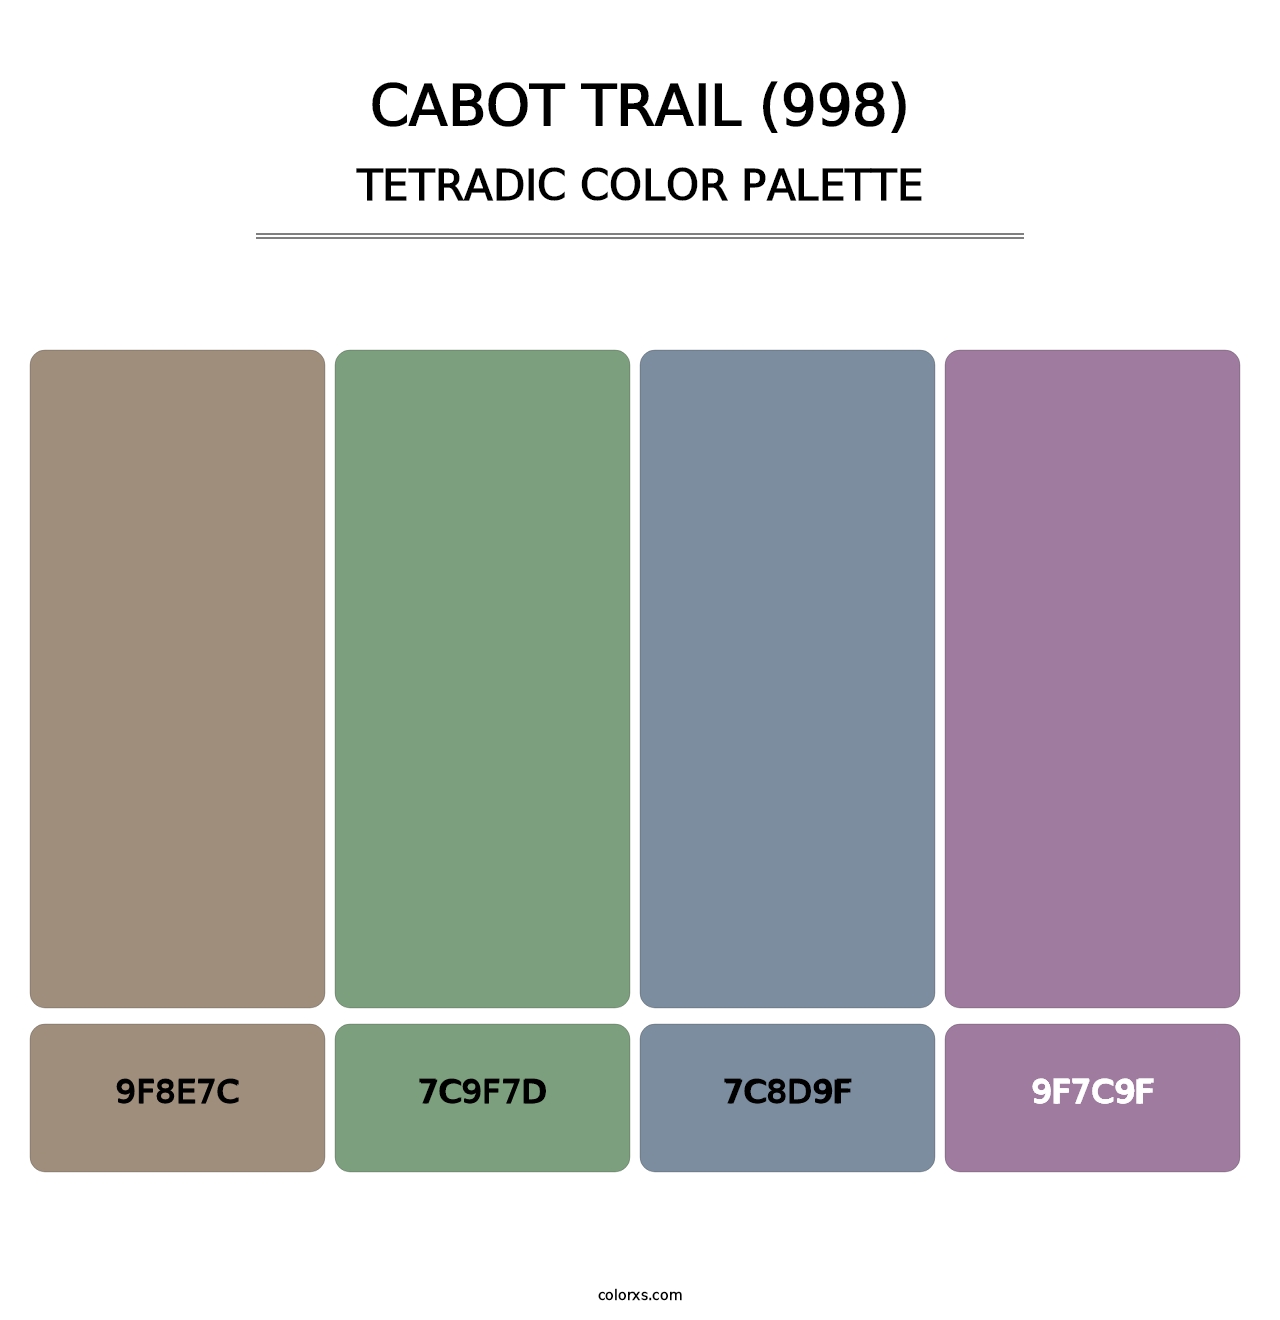 Cabot Trail (998) - Tetradic Color Palette